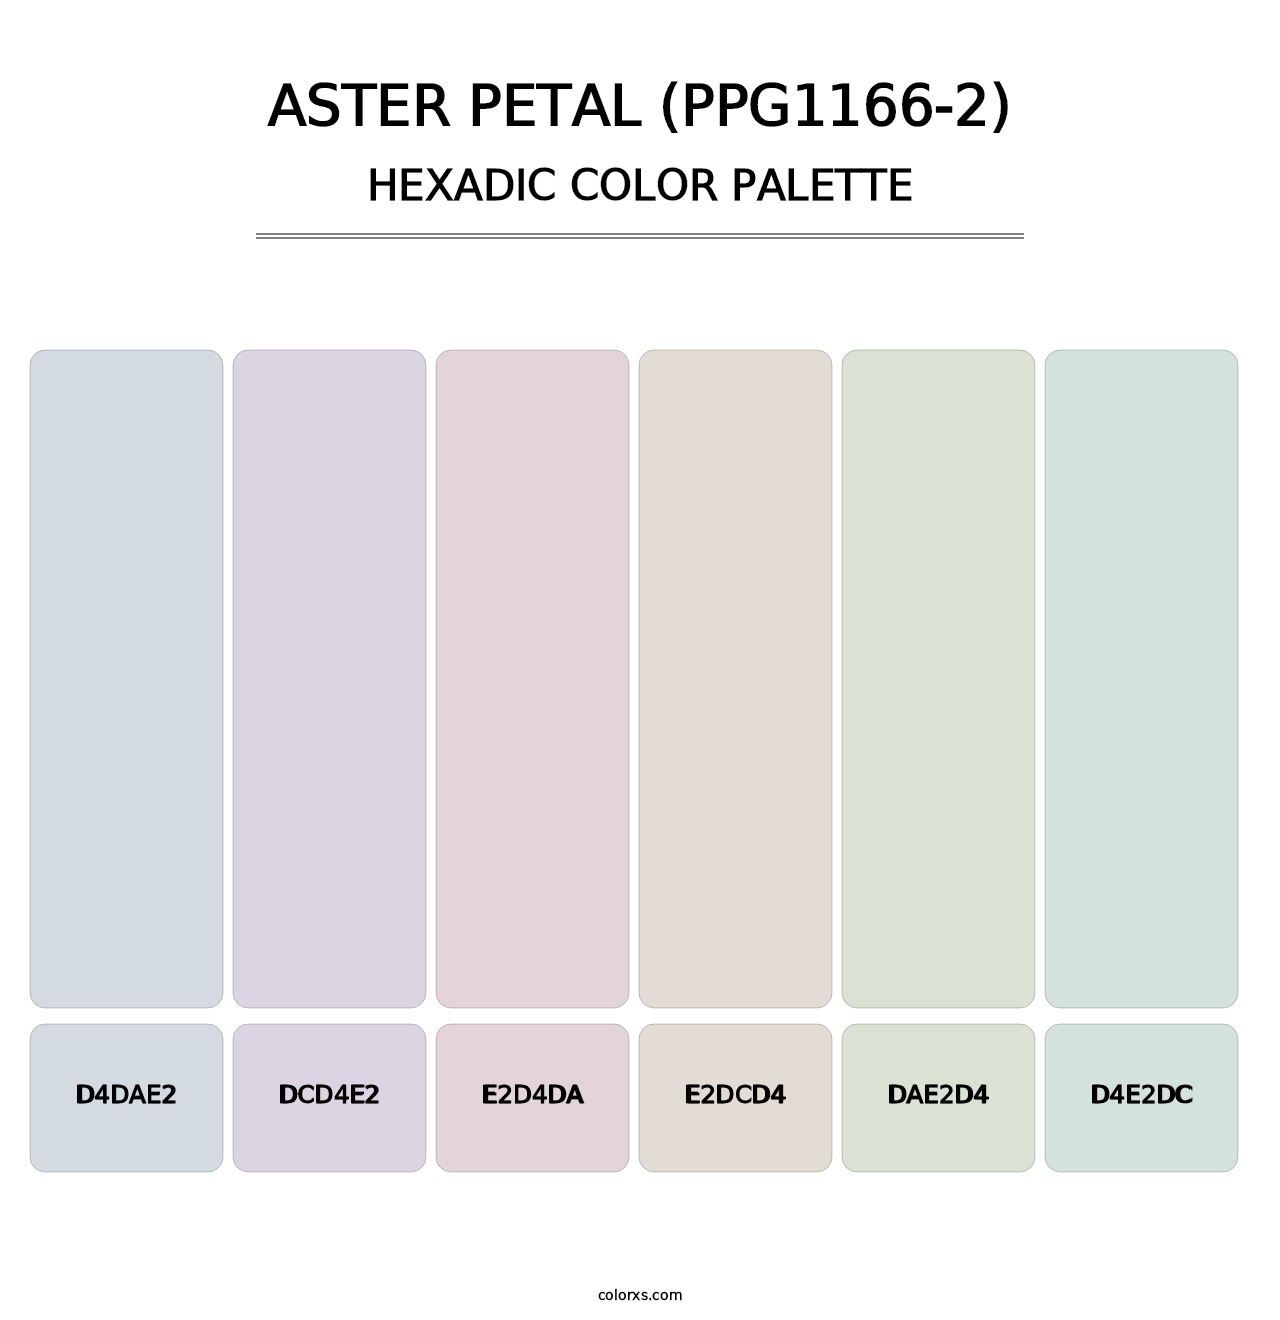 Aster Petal (PPG1166-2) - Hexadic Color Palette